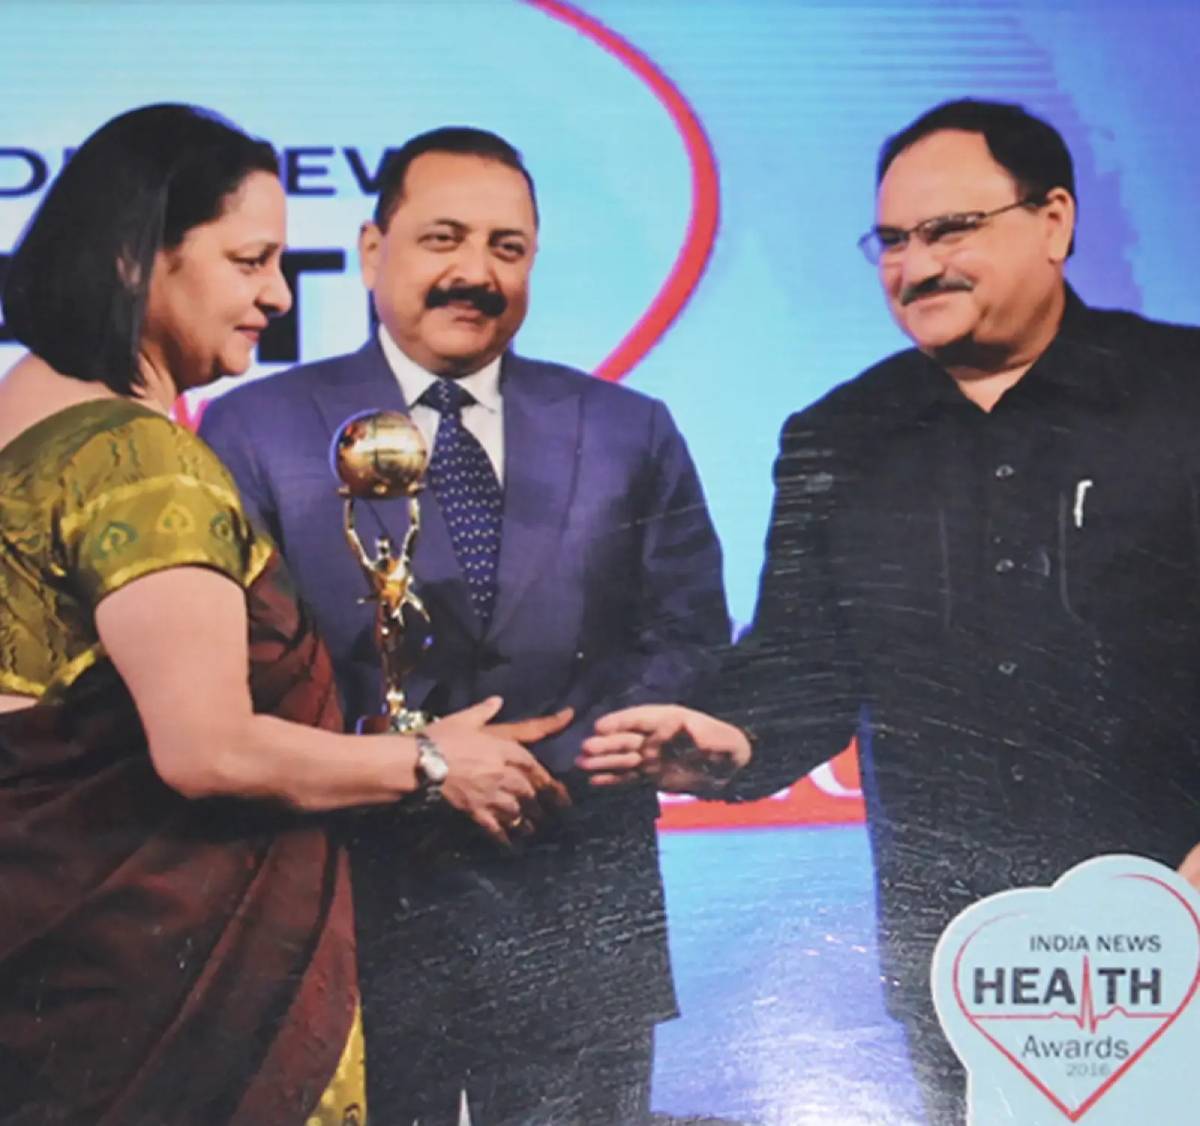 Dr. Bindu Garg - Best IVF Doctor in Gurgaon - Gurgaon Health, Personal Trainer